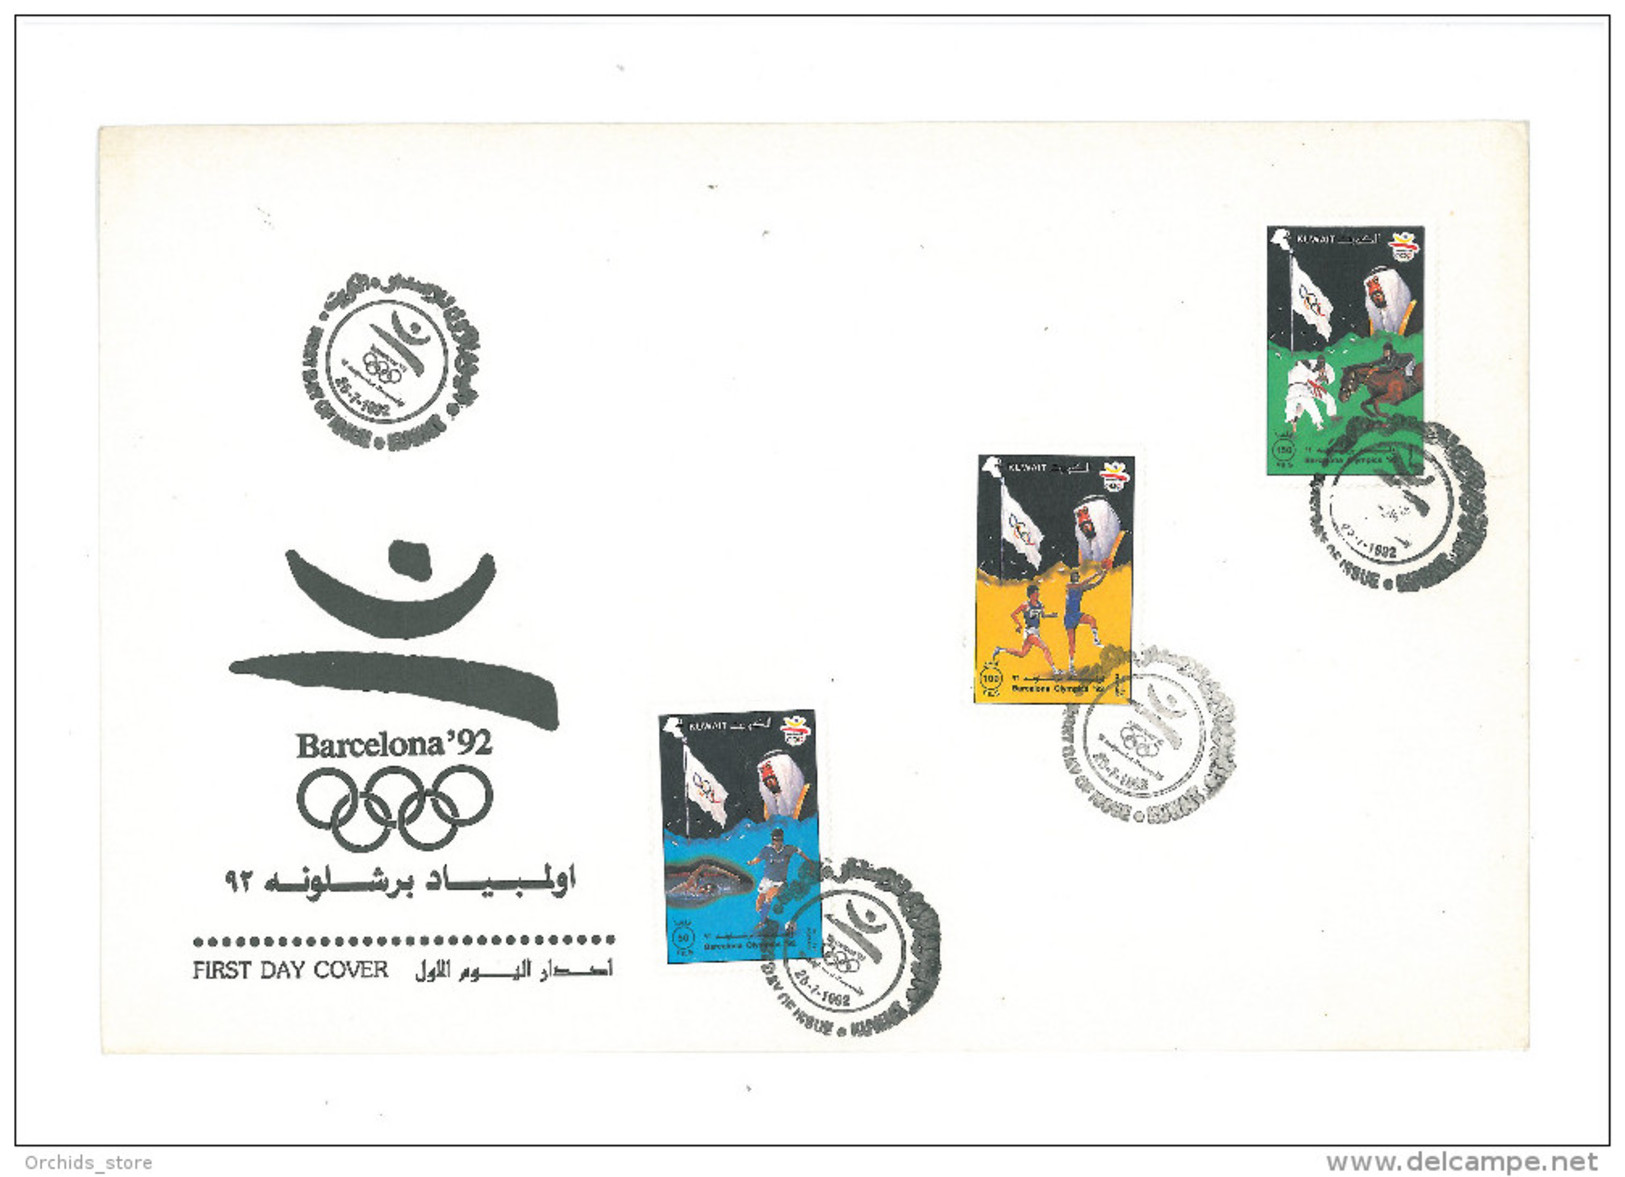 KUWAIT 1992 Nice FDC - Bercelona 92 Olympic Games - Spain - Sports - Football - Basketball - Horse Riding - Kuwait